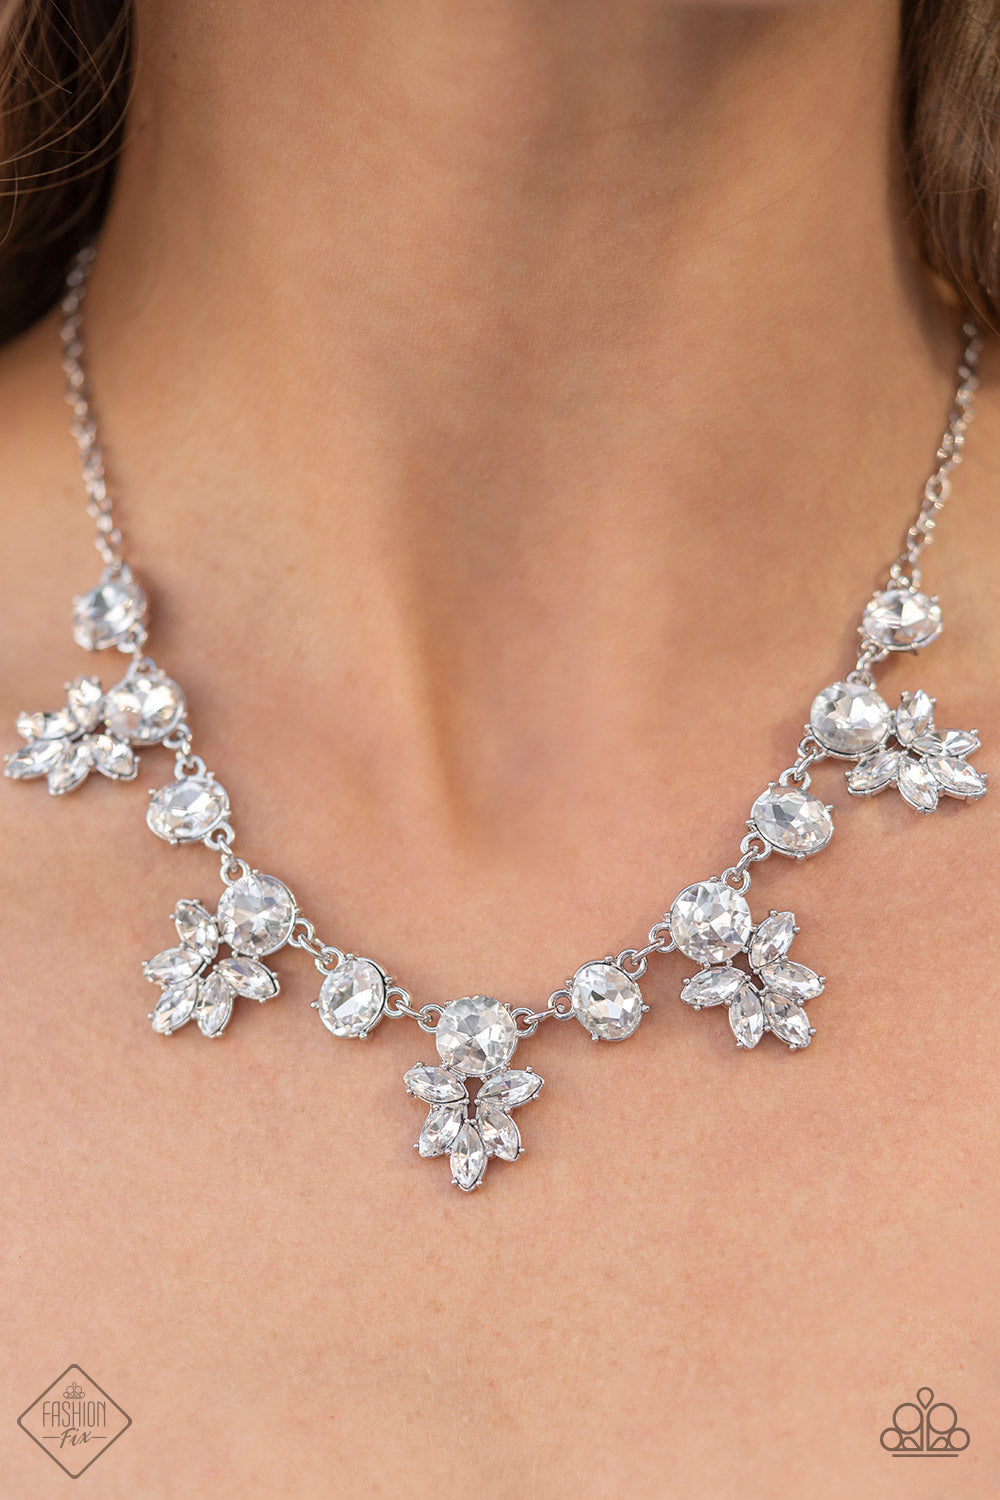 Prismatic Proposal - White Necklace - Fashion Fix